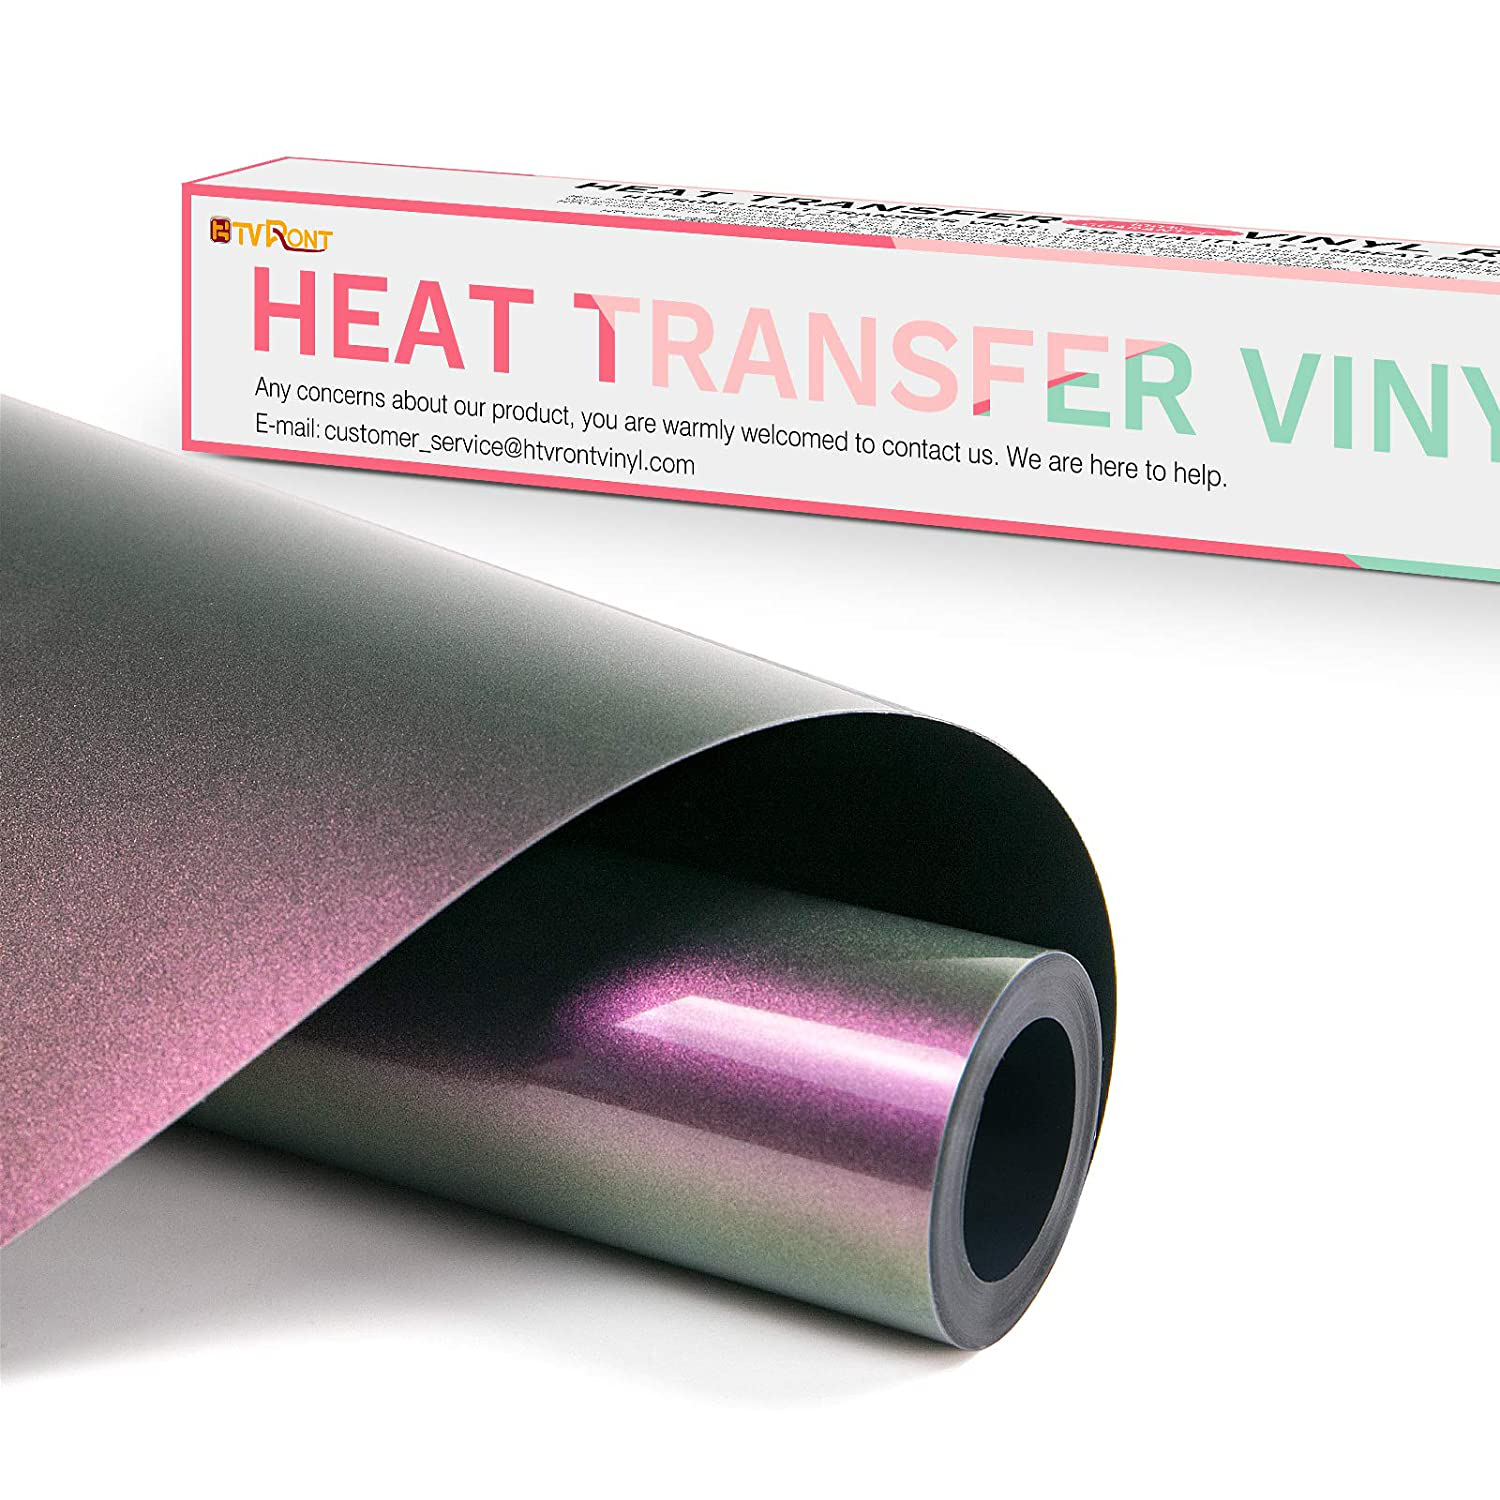 HTVRONT HTV Vinyl Rolls Heat Transfer Vinyl - 12" x 8ft Red HTV Vinyl for Shirts, Iron on Vinyl for Cricut & Cameo - Easy to Cut & Weed for Heat Vinyl Design